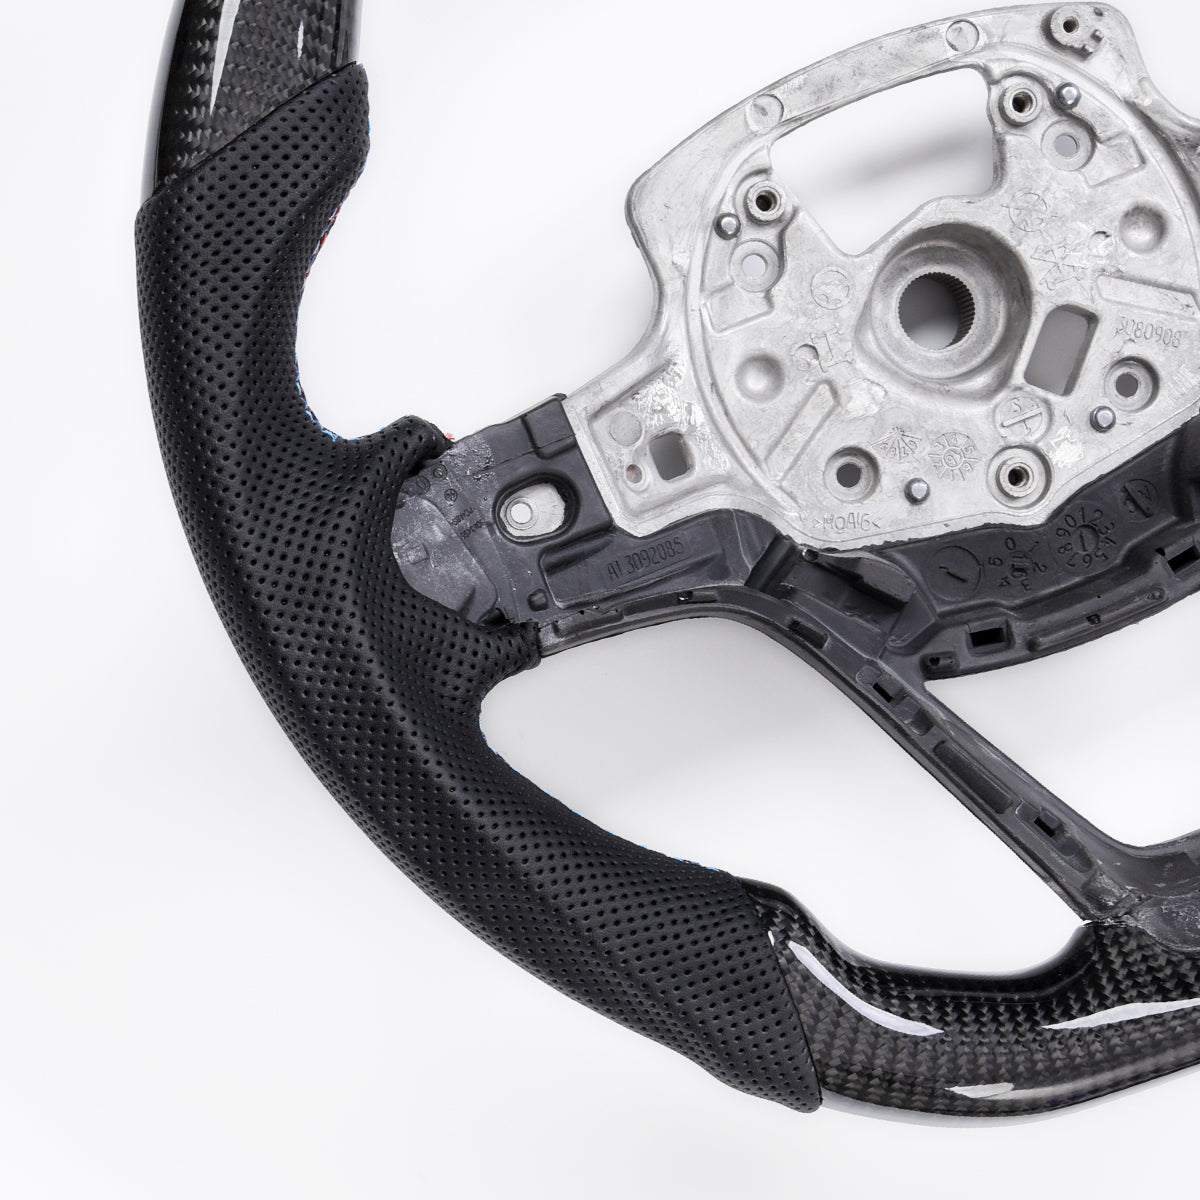 Revolve Carbon Fiber OEM Steering Wheel BMW i8 2014-2022 - revolvesteering